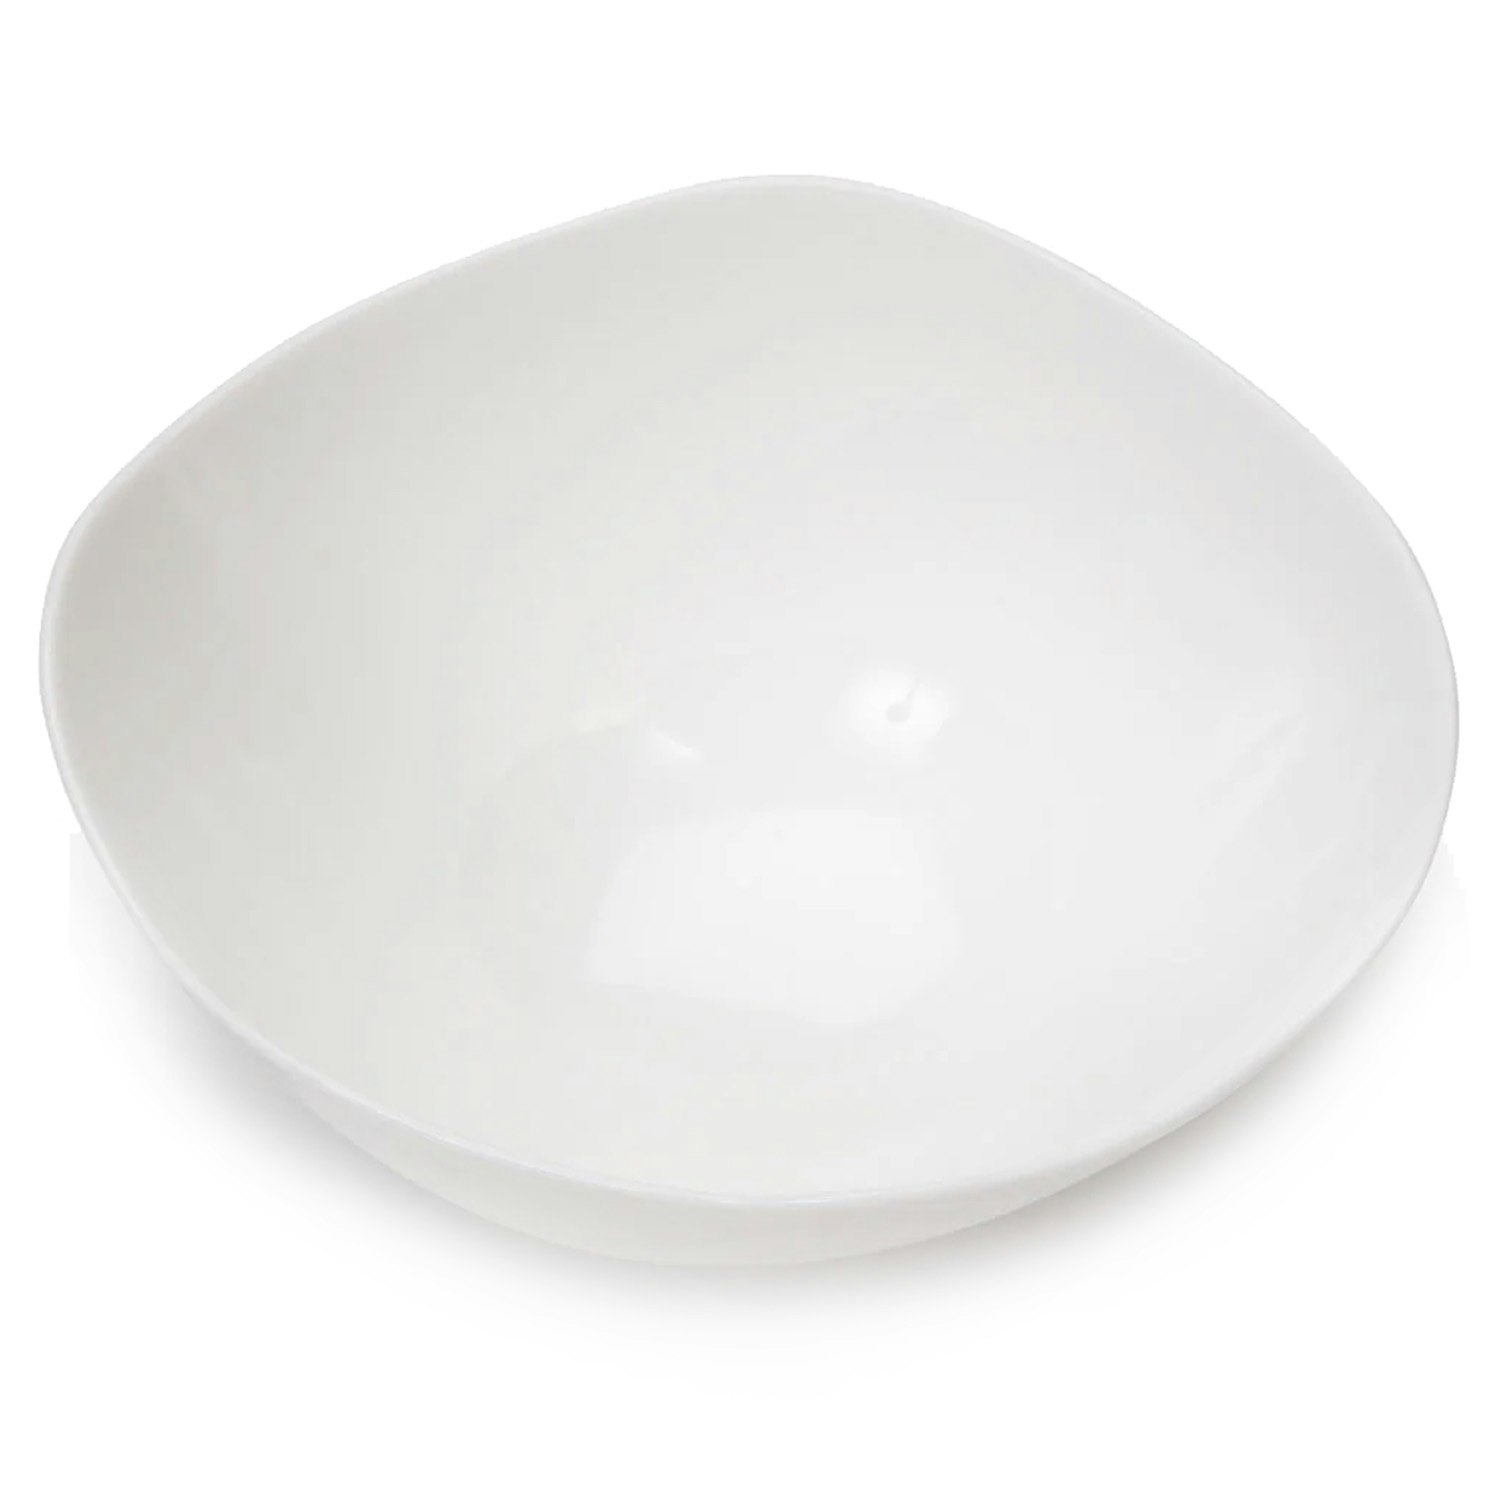 https://royaldesign.com/image/2/serax-bowl-white-kohachi-2